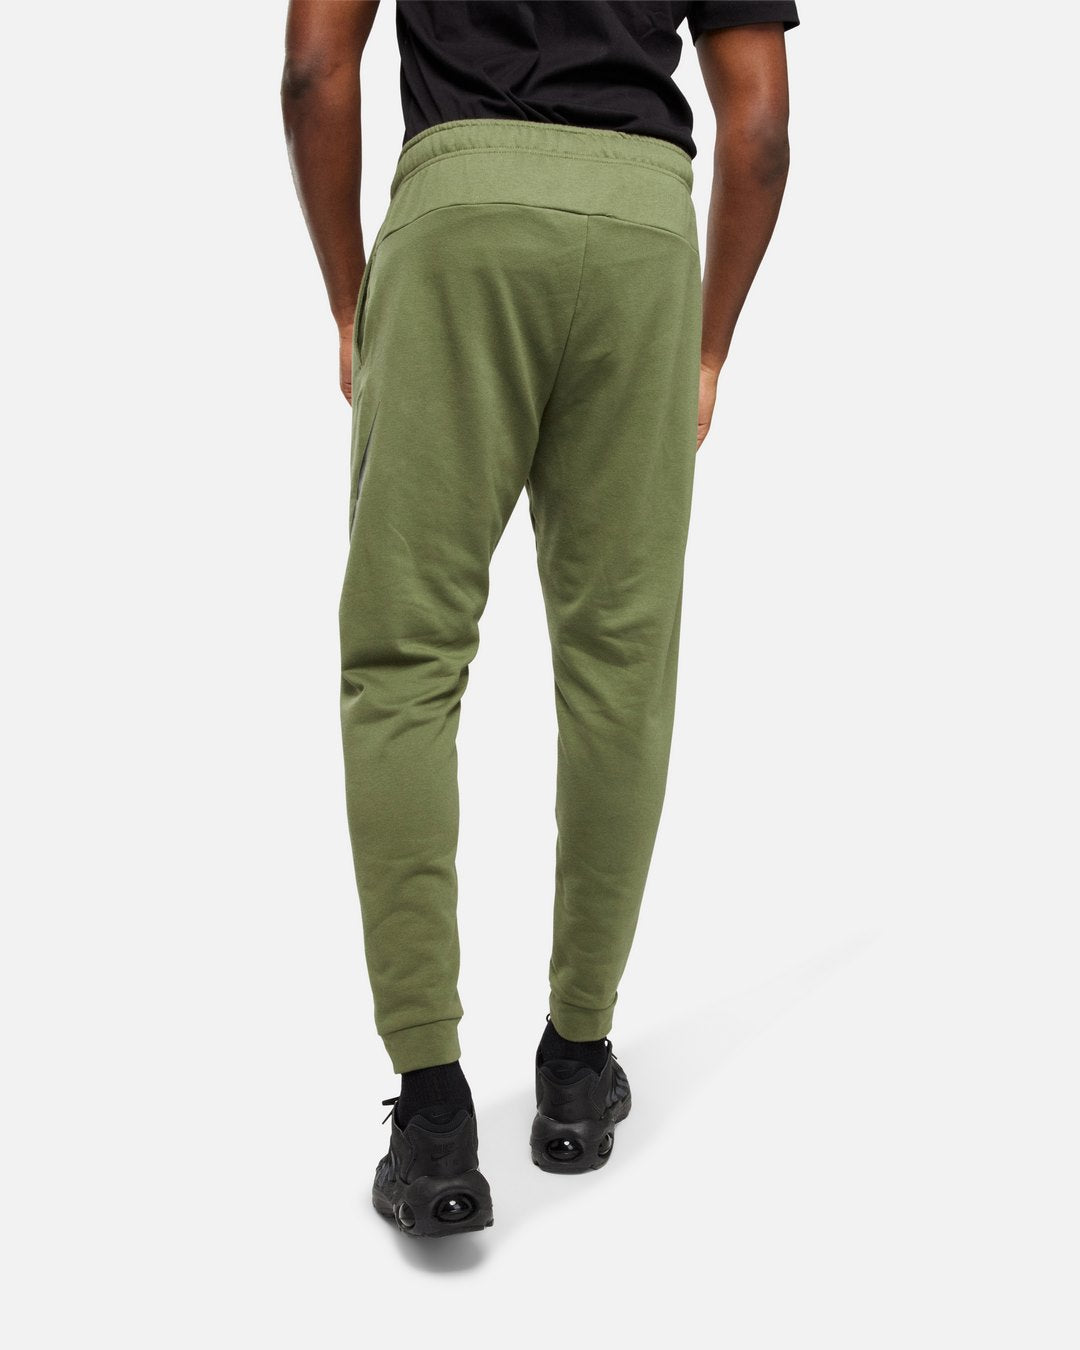 Pantalon Nike Dry Graphic - Kaki/Noir